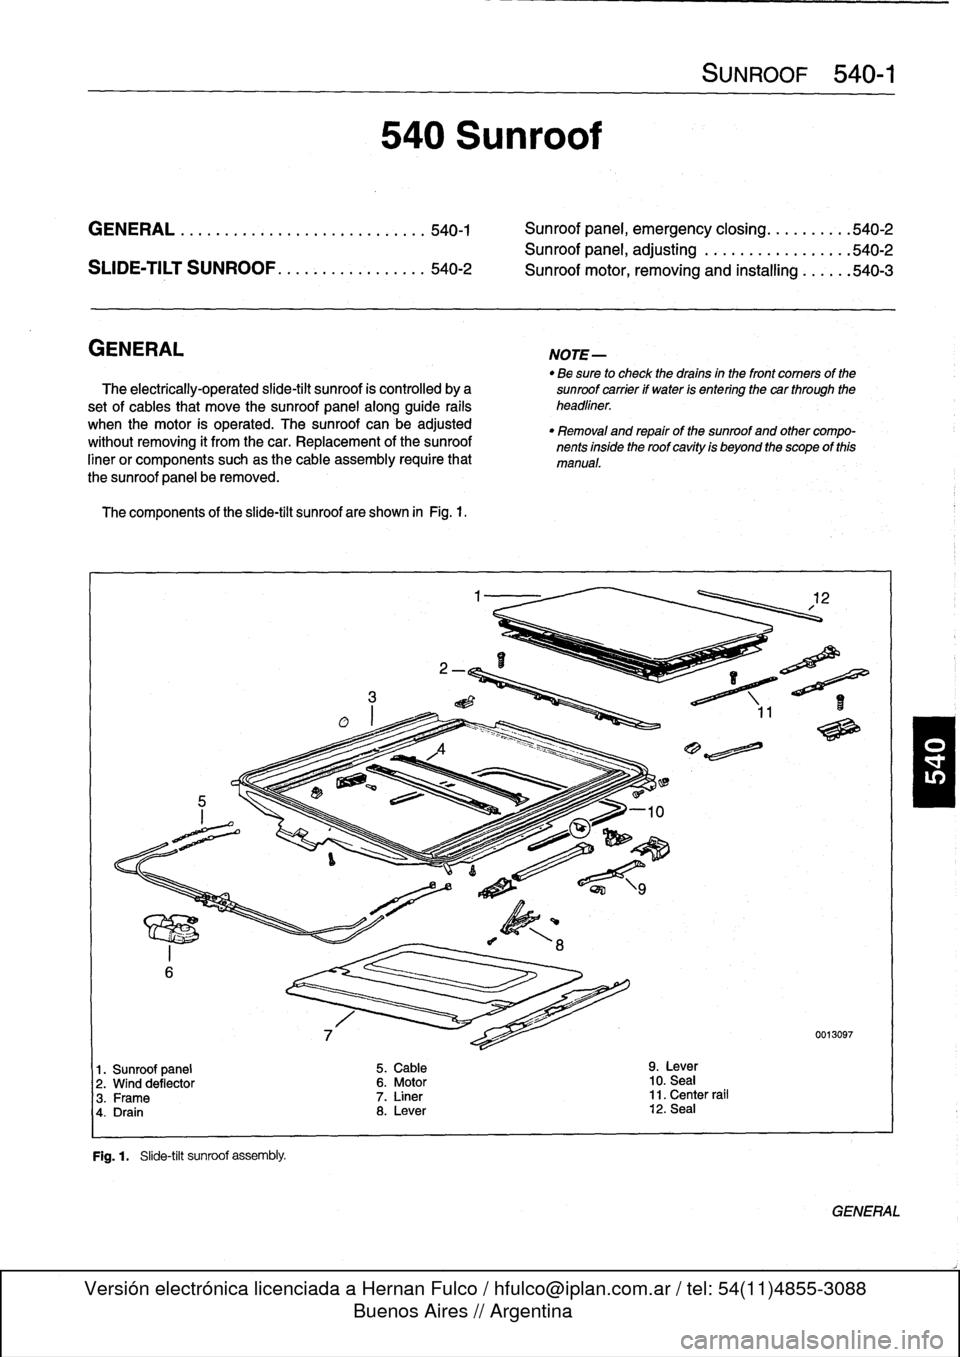 BMW 323i 1995 E36 Workshop Manual 
GENERAL
...
.
.
.
.
.
................
.
.
.
.
540-1

	

Sunroof
panel,
emergency
closing
.......
.
.
.540-2

Sunroof
panel,
adjusting
..
.
...........
.
.
.540-2

SUDE-TILT
SUNROOF
.
.
.
.
.
.
.
.
.